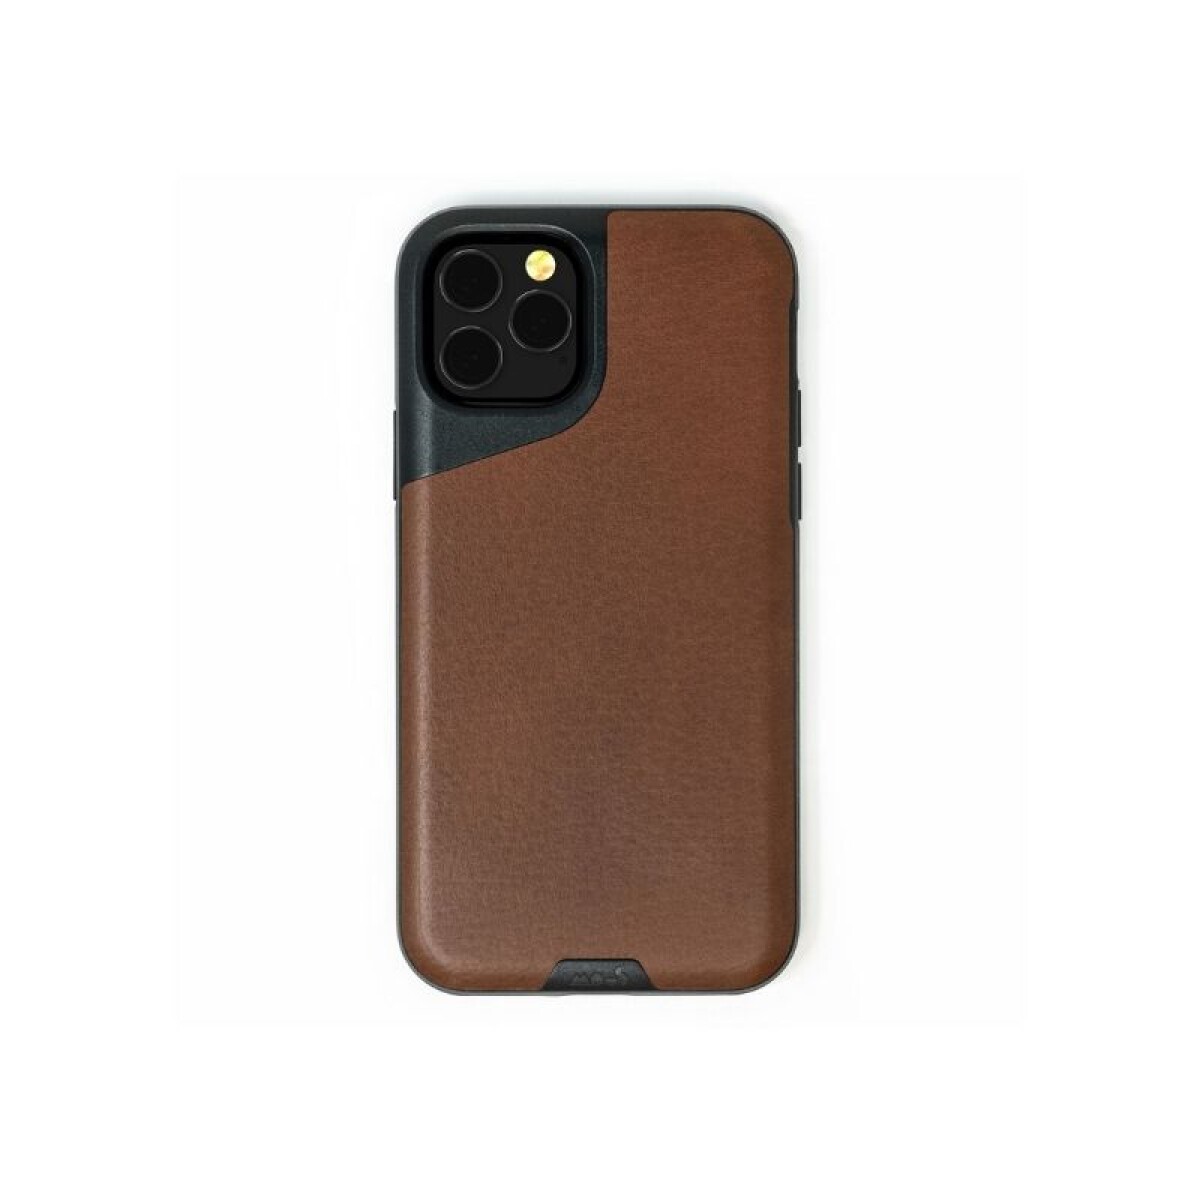 Protector Mous Contour de cuero marrón para Iphone 11 Pro 